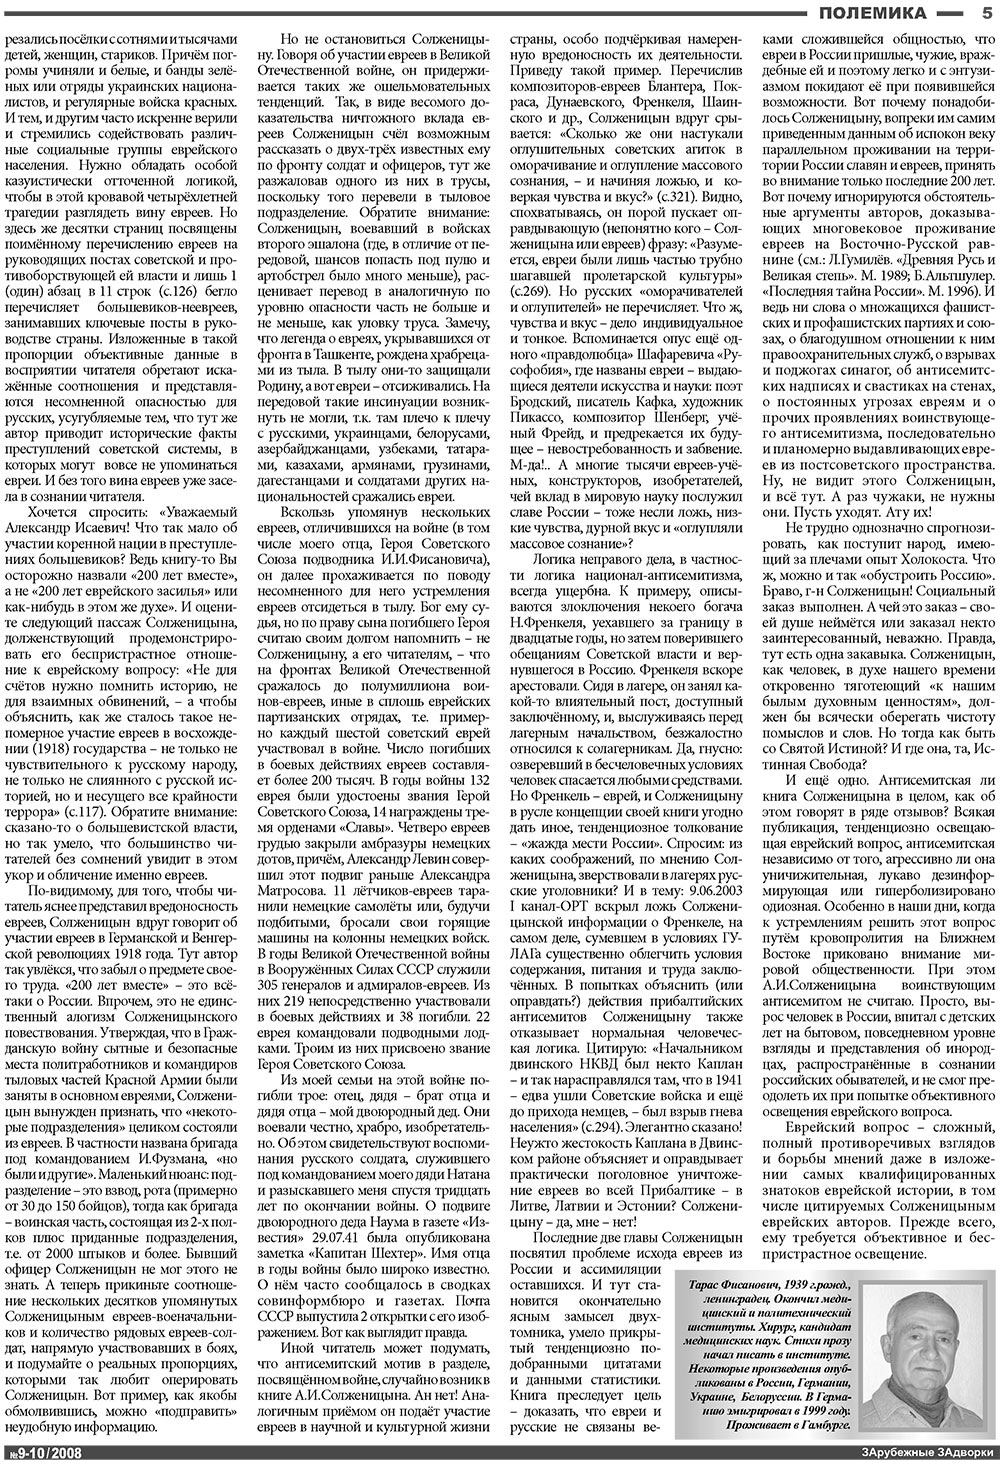 Известия BW (газета). 2008 год, номер 10, стр. 5